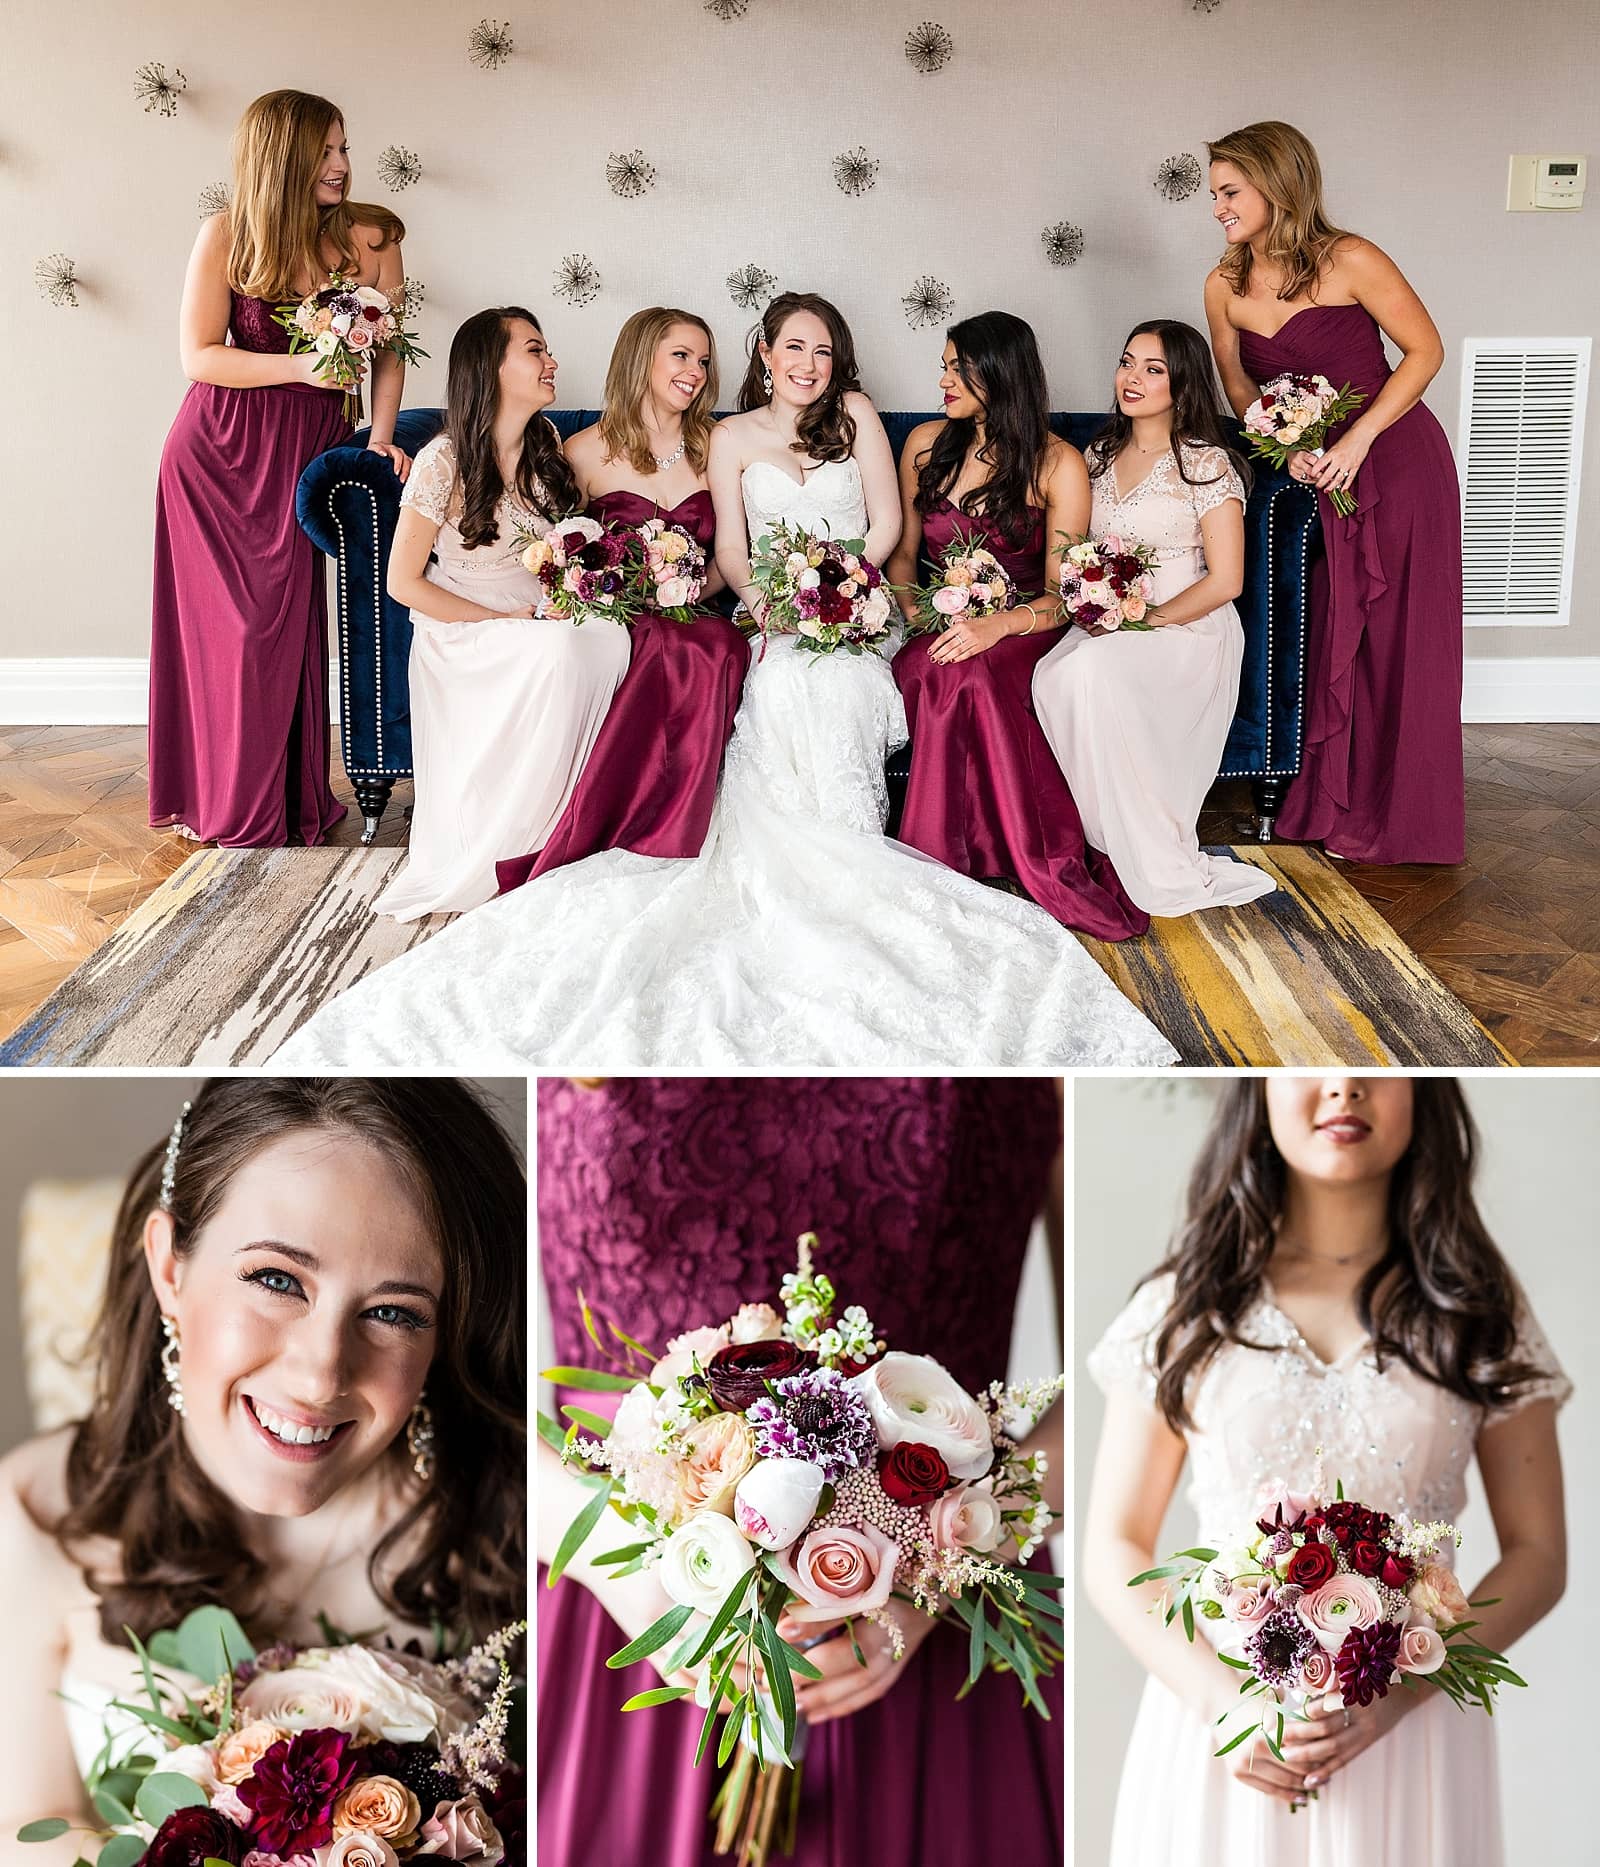 Bridal portraits with bridal party, bouquets, flower details